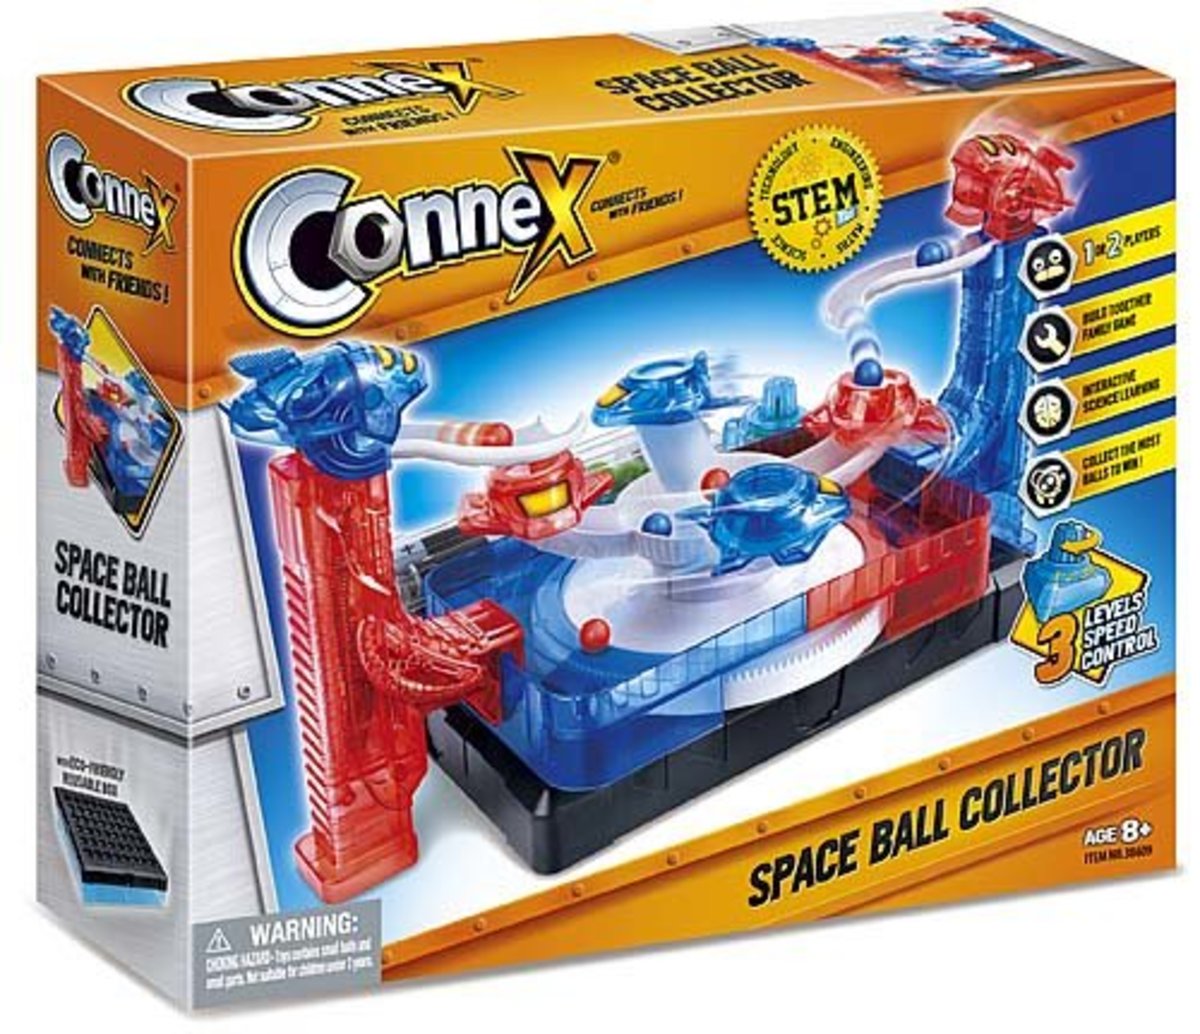 Connex Space Ball Collector 雙人空間彈珠